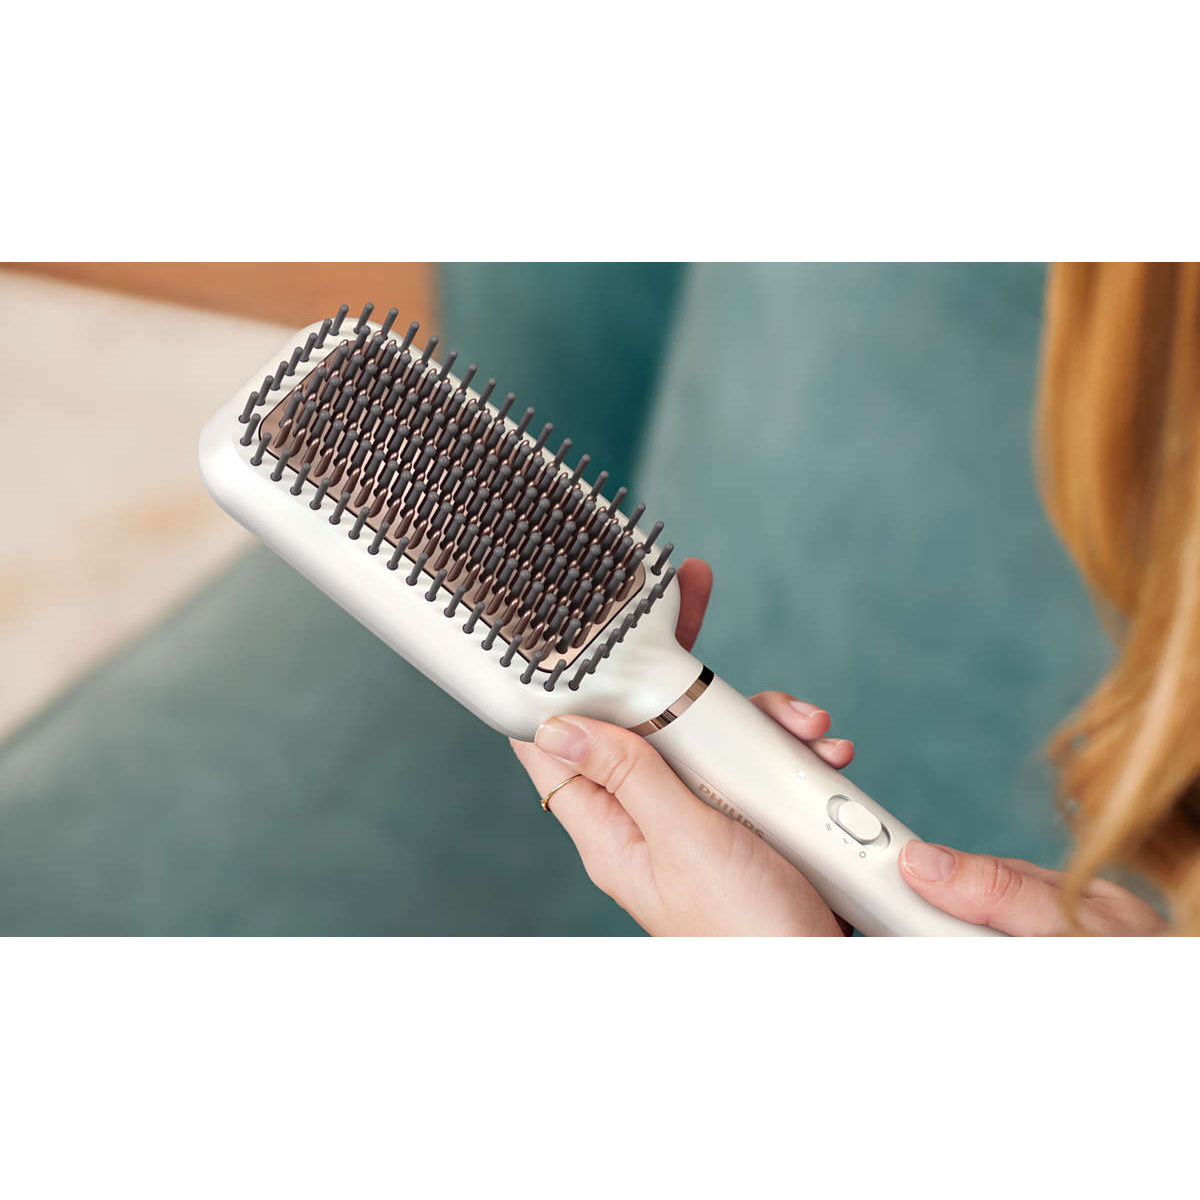 Philips launches a smart fiveminute hair straightening brush